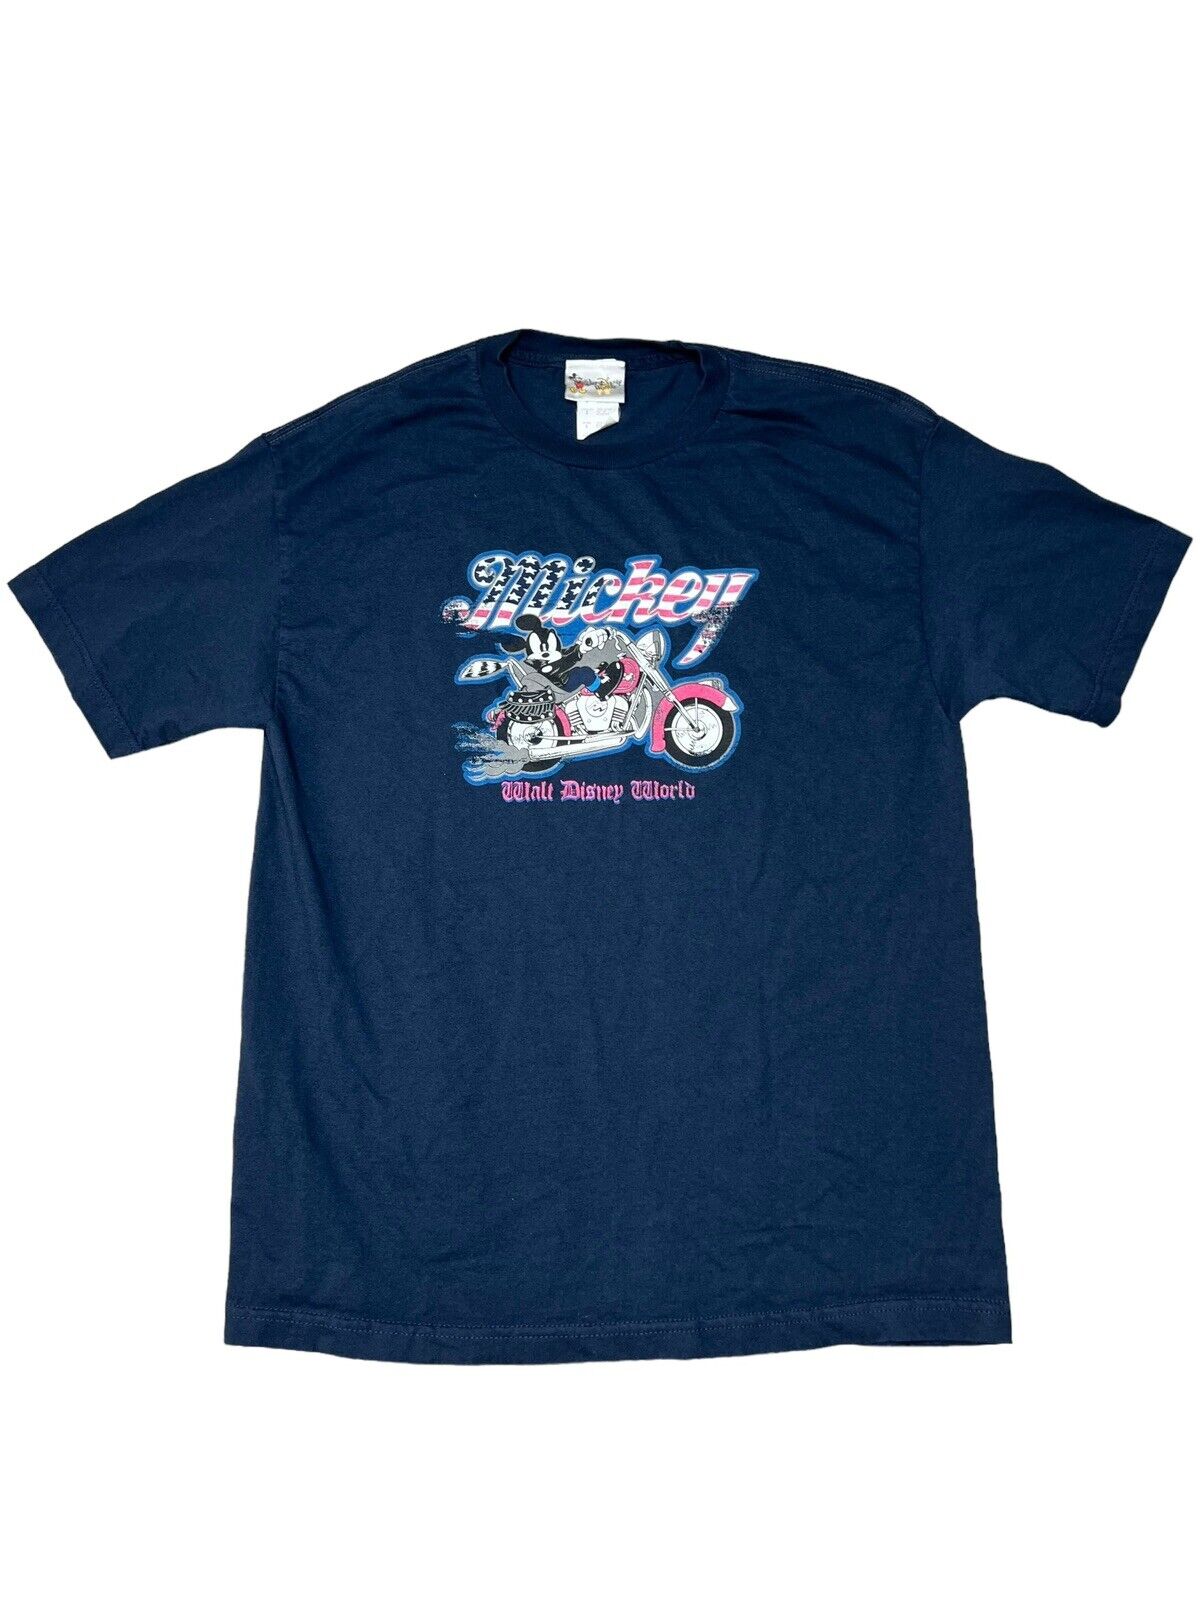 Vintage Walt Disney World Mickey Mouse T-Shirt Motorcycle Americana L Biker